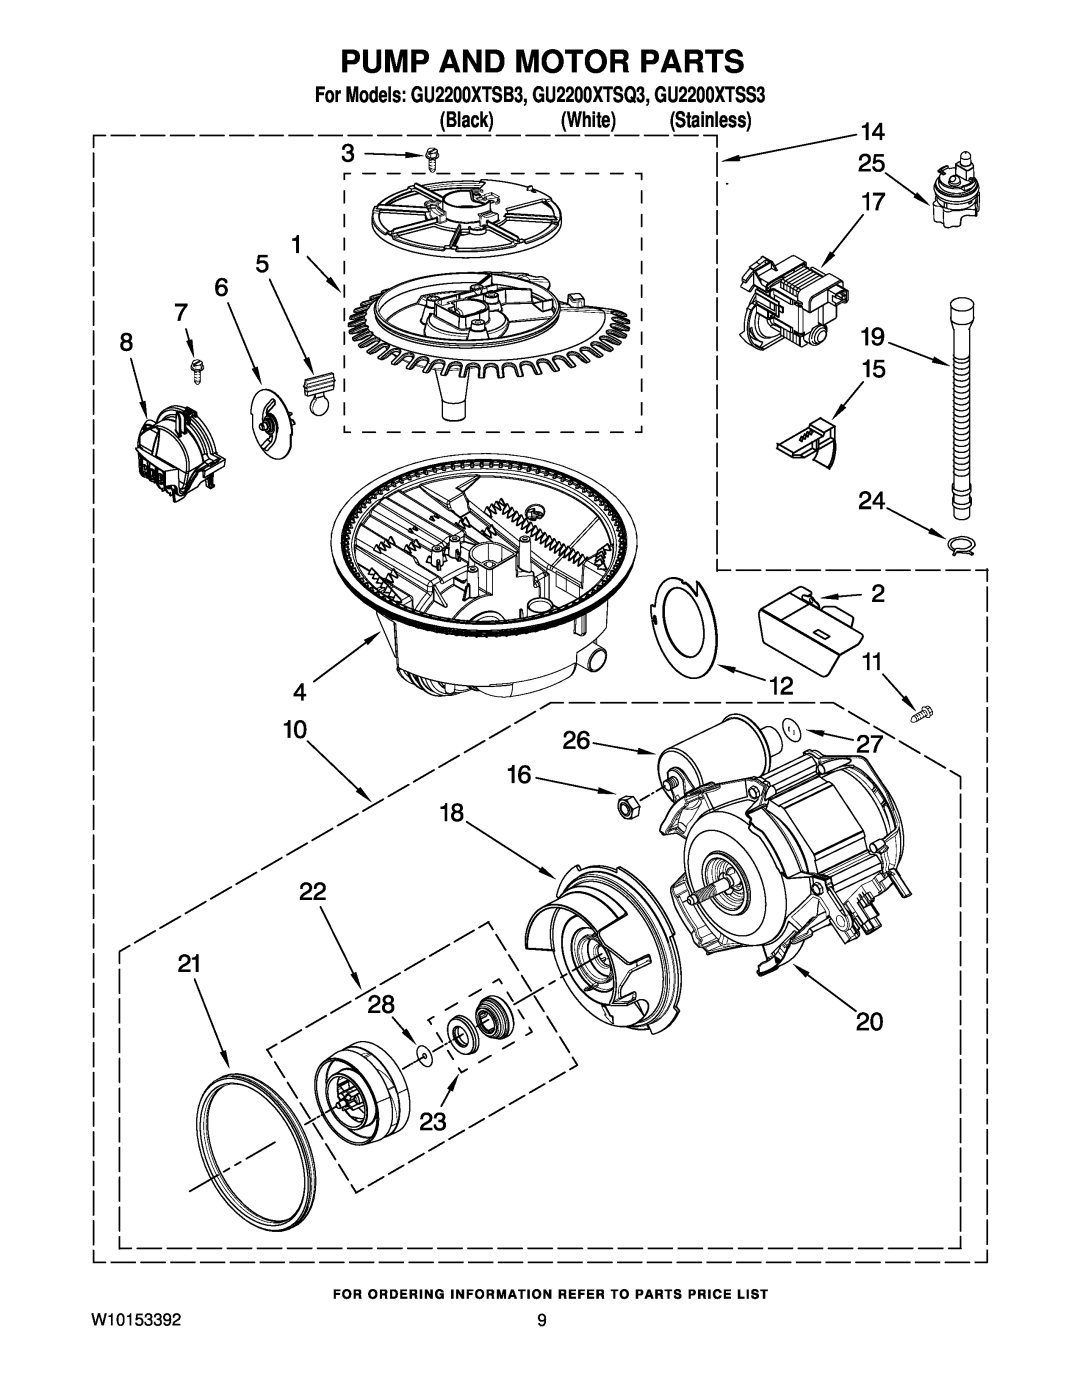 Whirlpool manual Pump And Motor Parts, For Models GU2200XTSB3, GU2200XTSQ3, GU2200XTSS3, Black White Stainless 